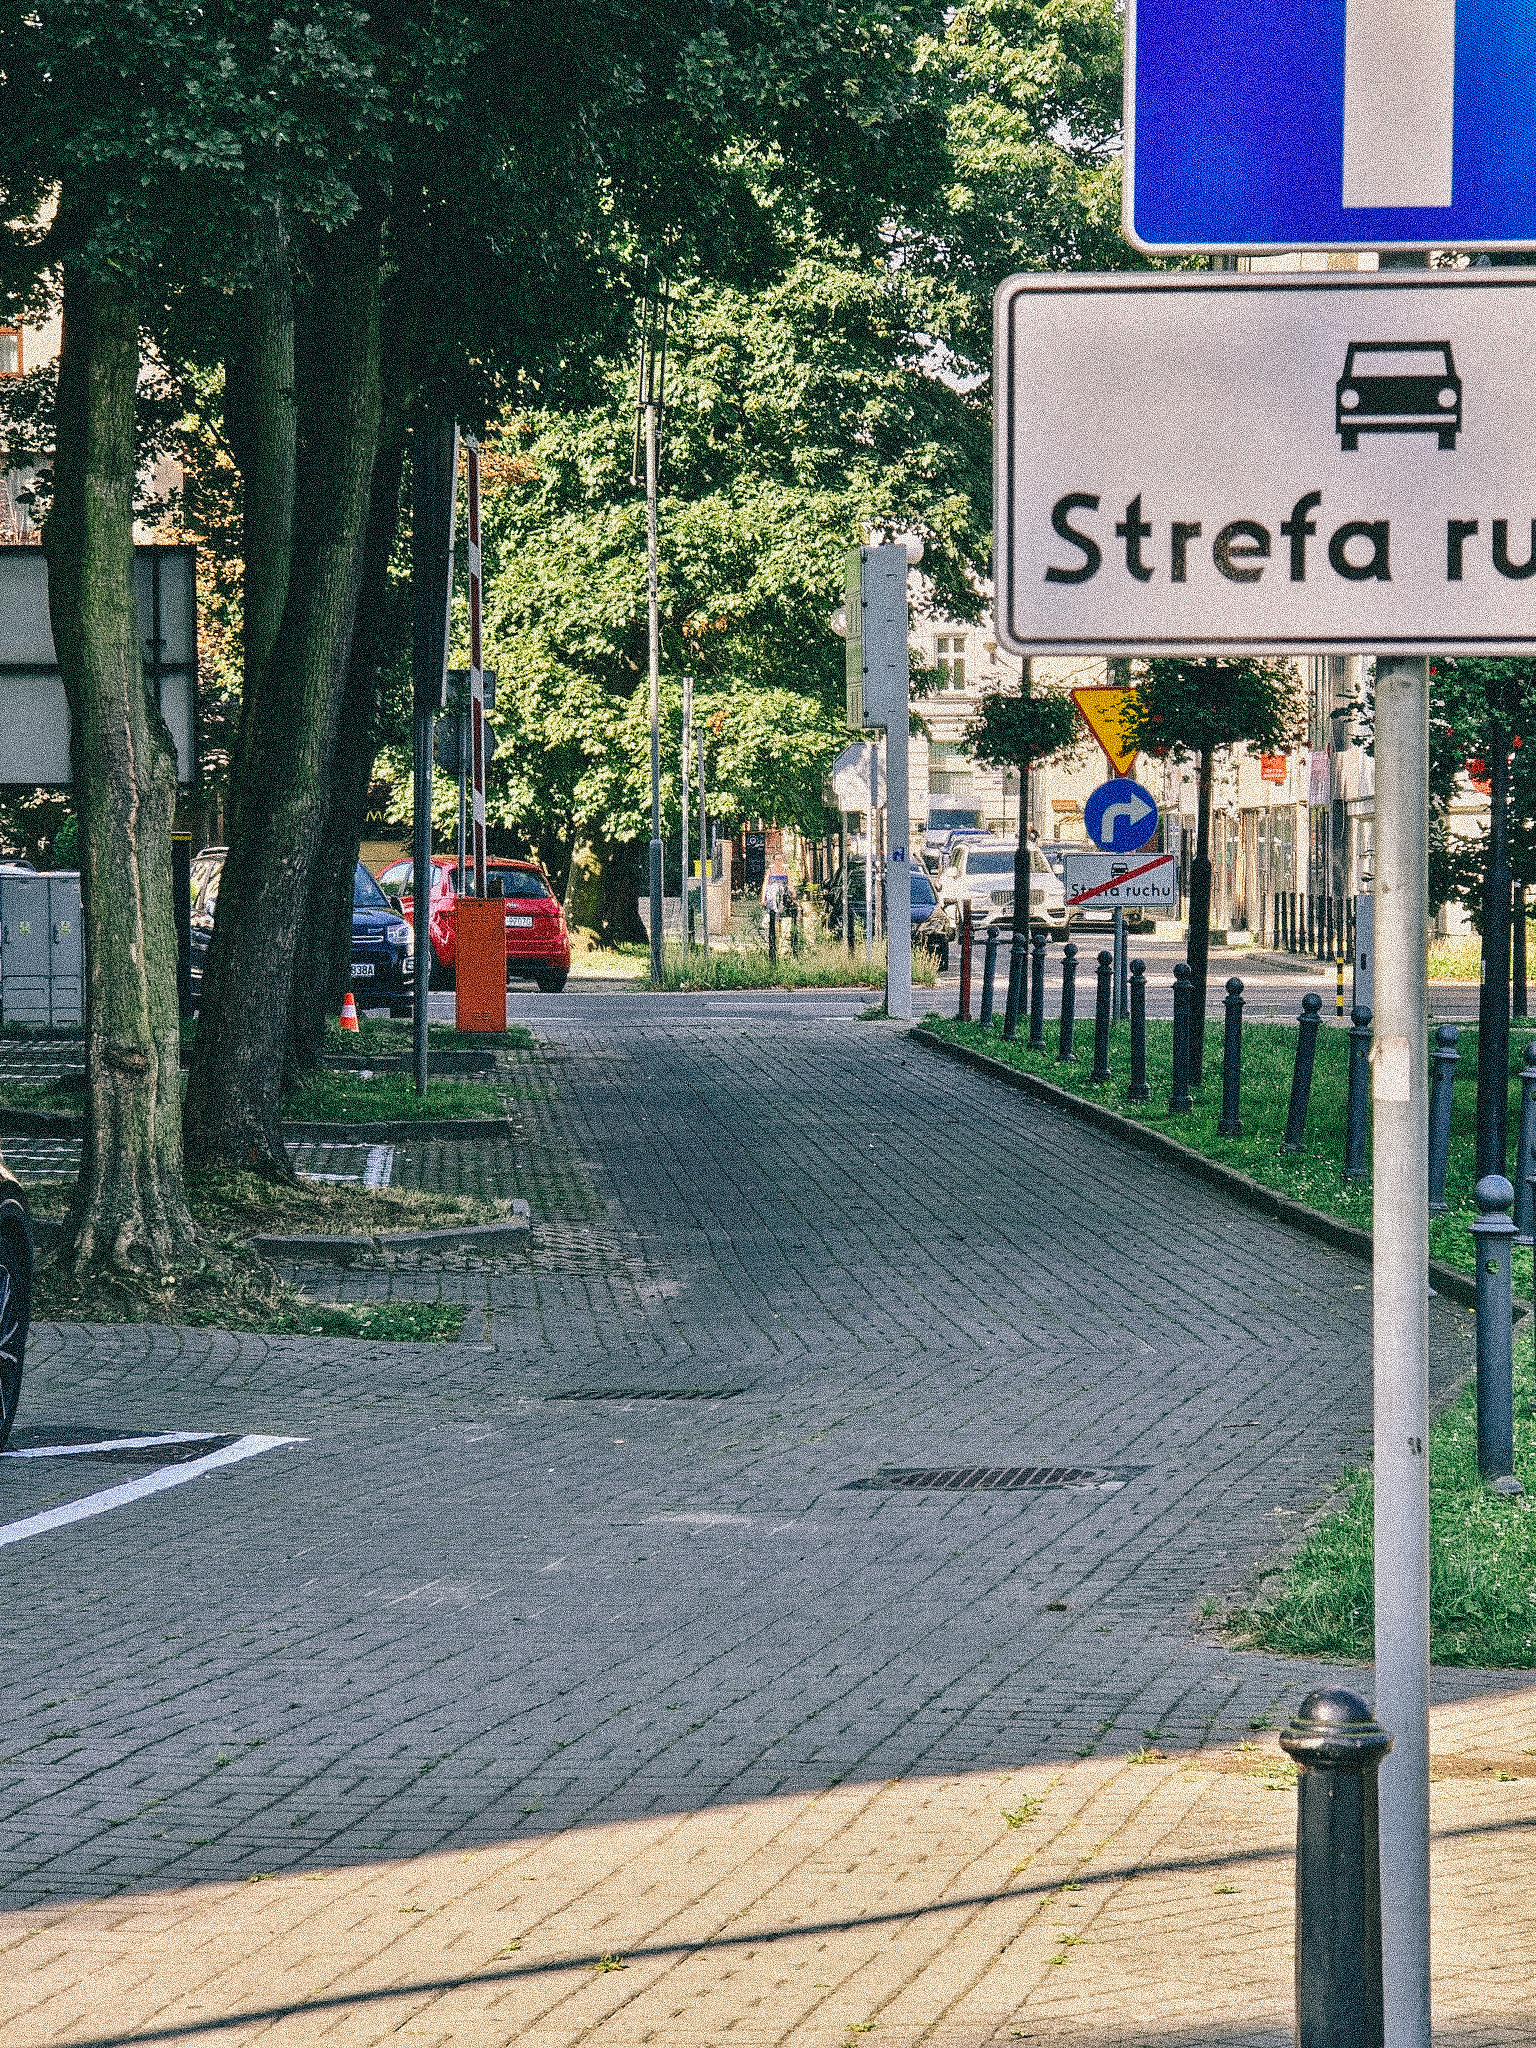 Fragment drogi za urzędem miejskim i znak "strefa ruchu"